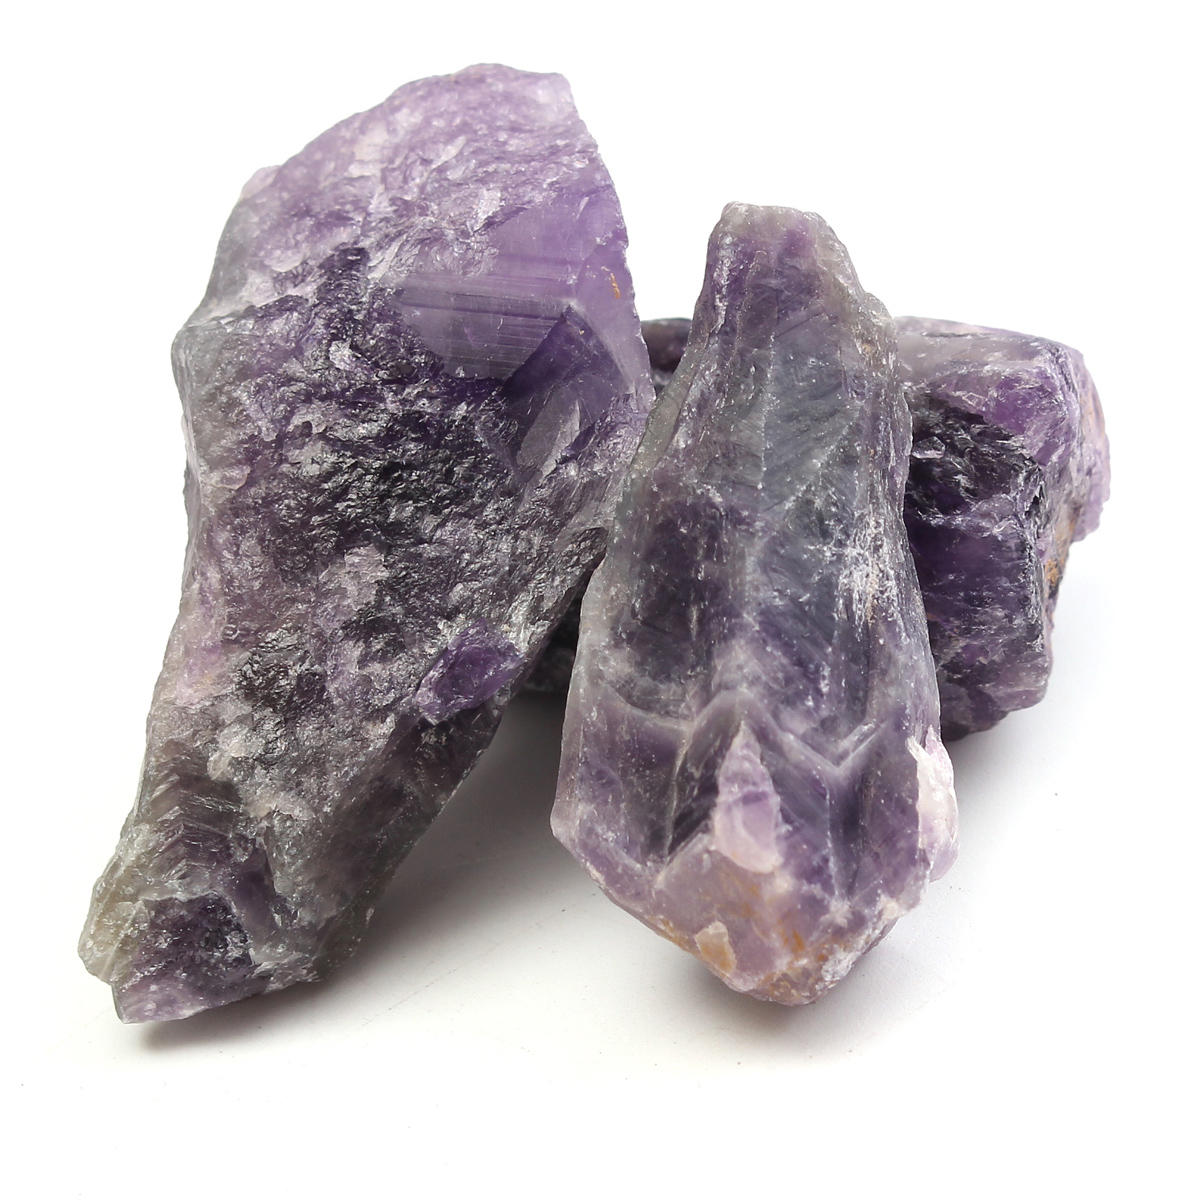 Beliebte 100g Natürliche lila Amethyst Punkt Quarz Kristall Rough Rock ProbeRSCW 